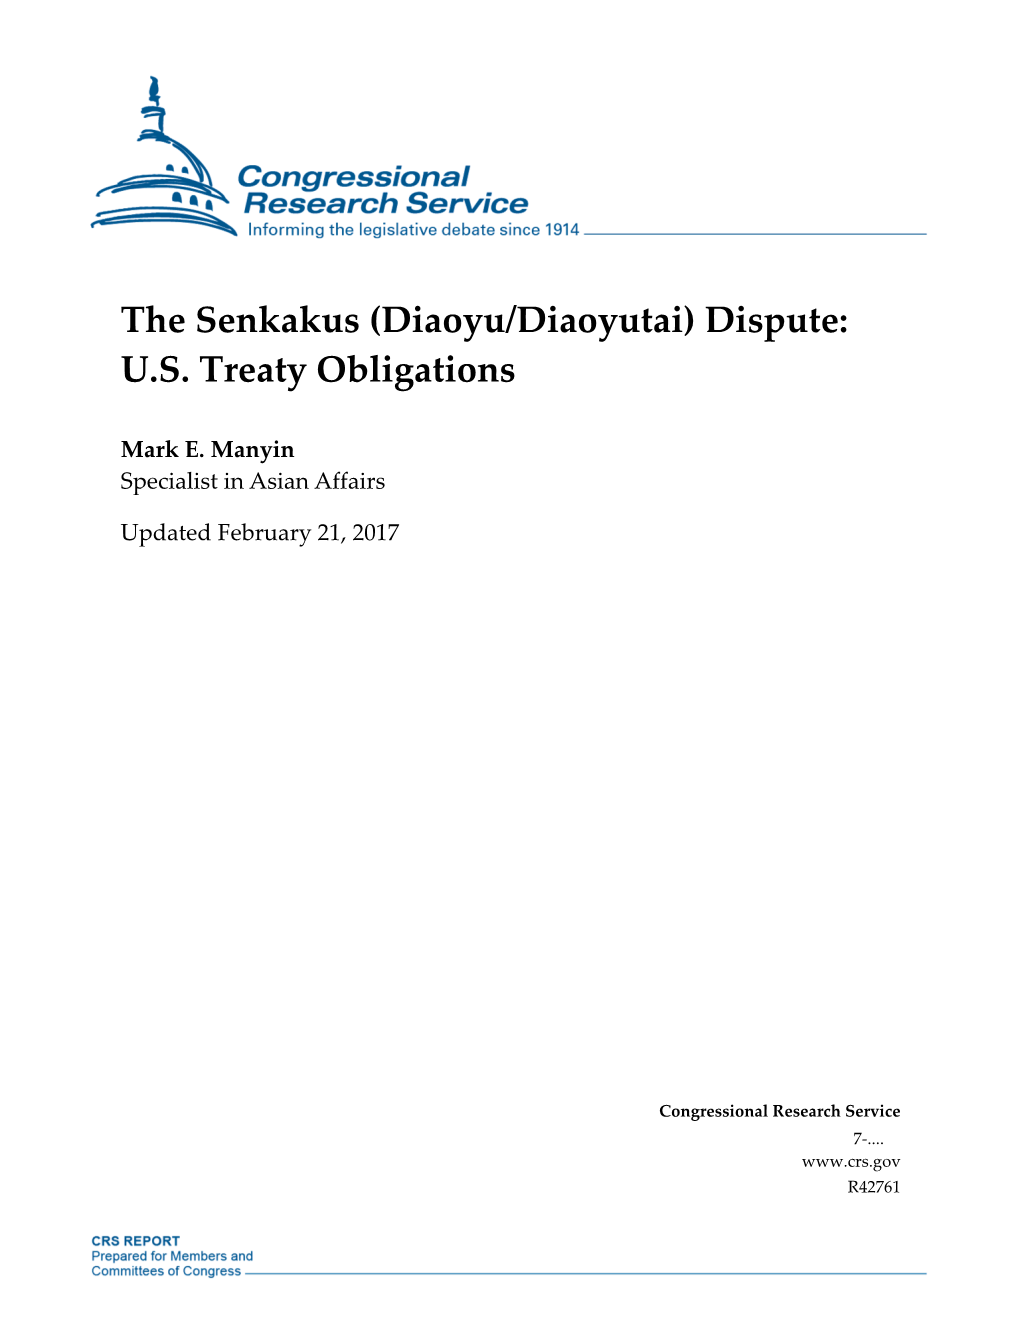 The Senkakus (Diaoyu/Diaoyutai) Dispute: U.S